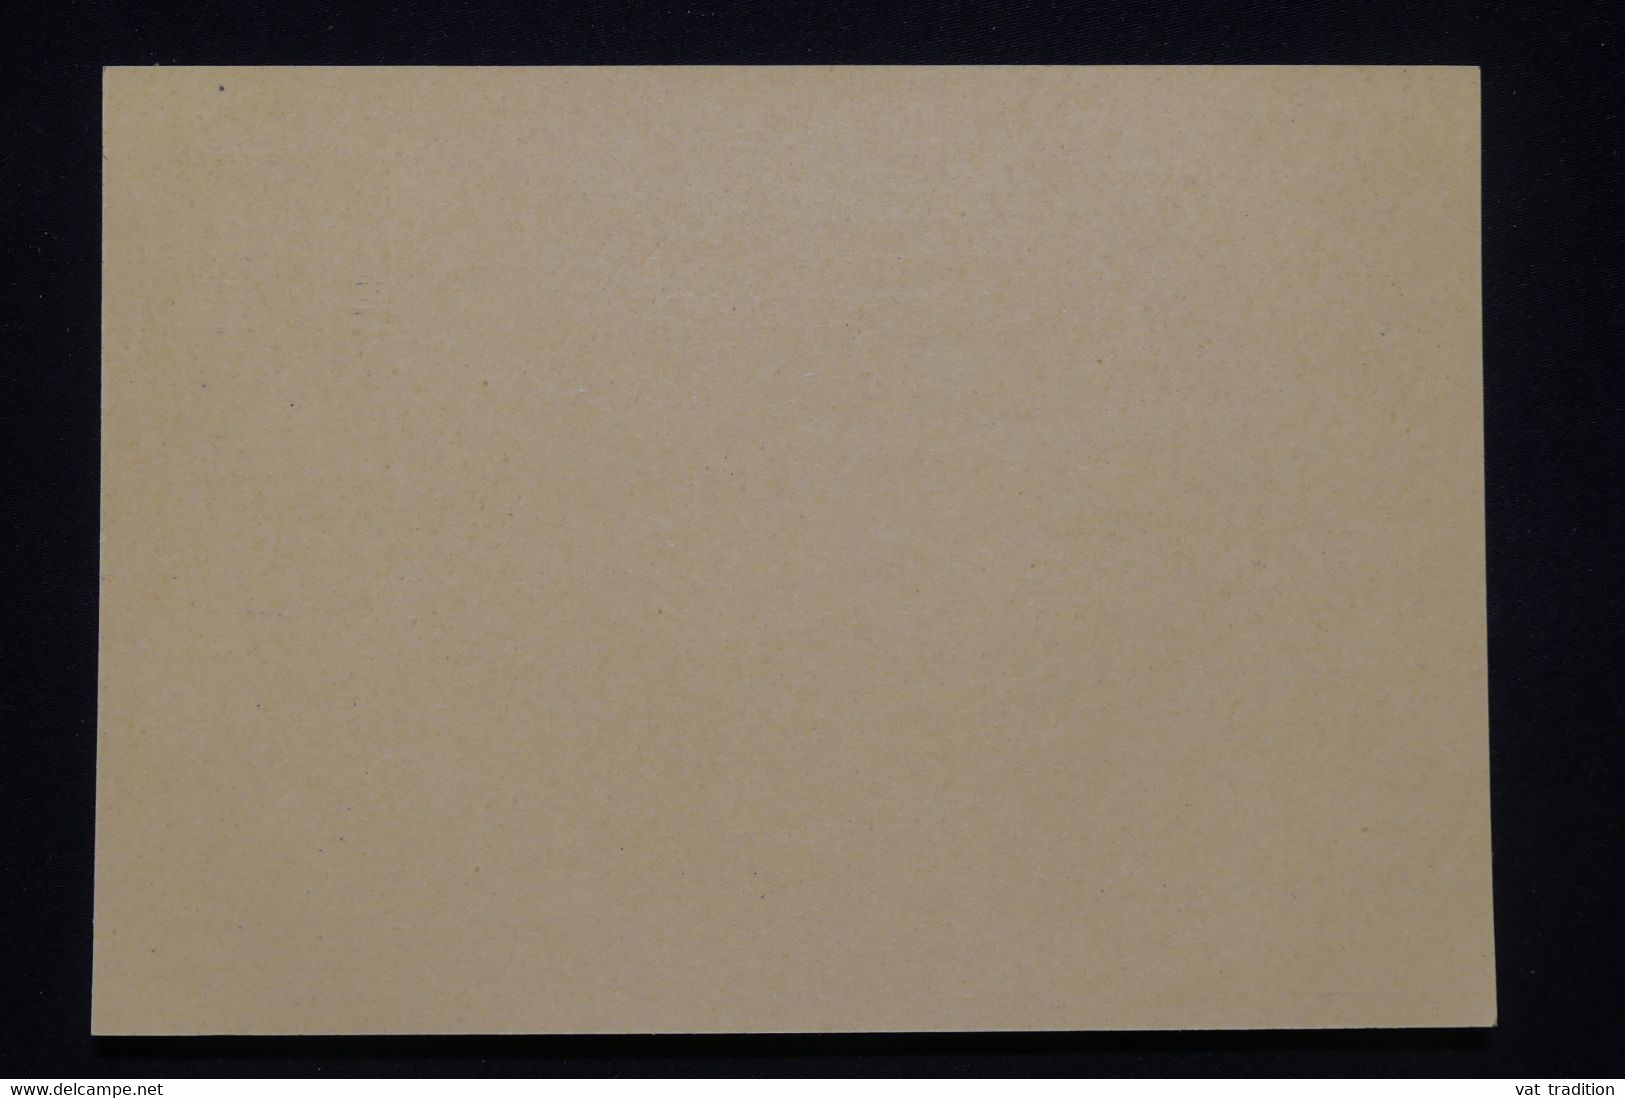 RUANDA URUNDI - Entier Postal Surchargé, Non Circulé - L 100228 - Stamped Stationery